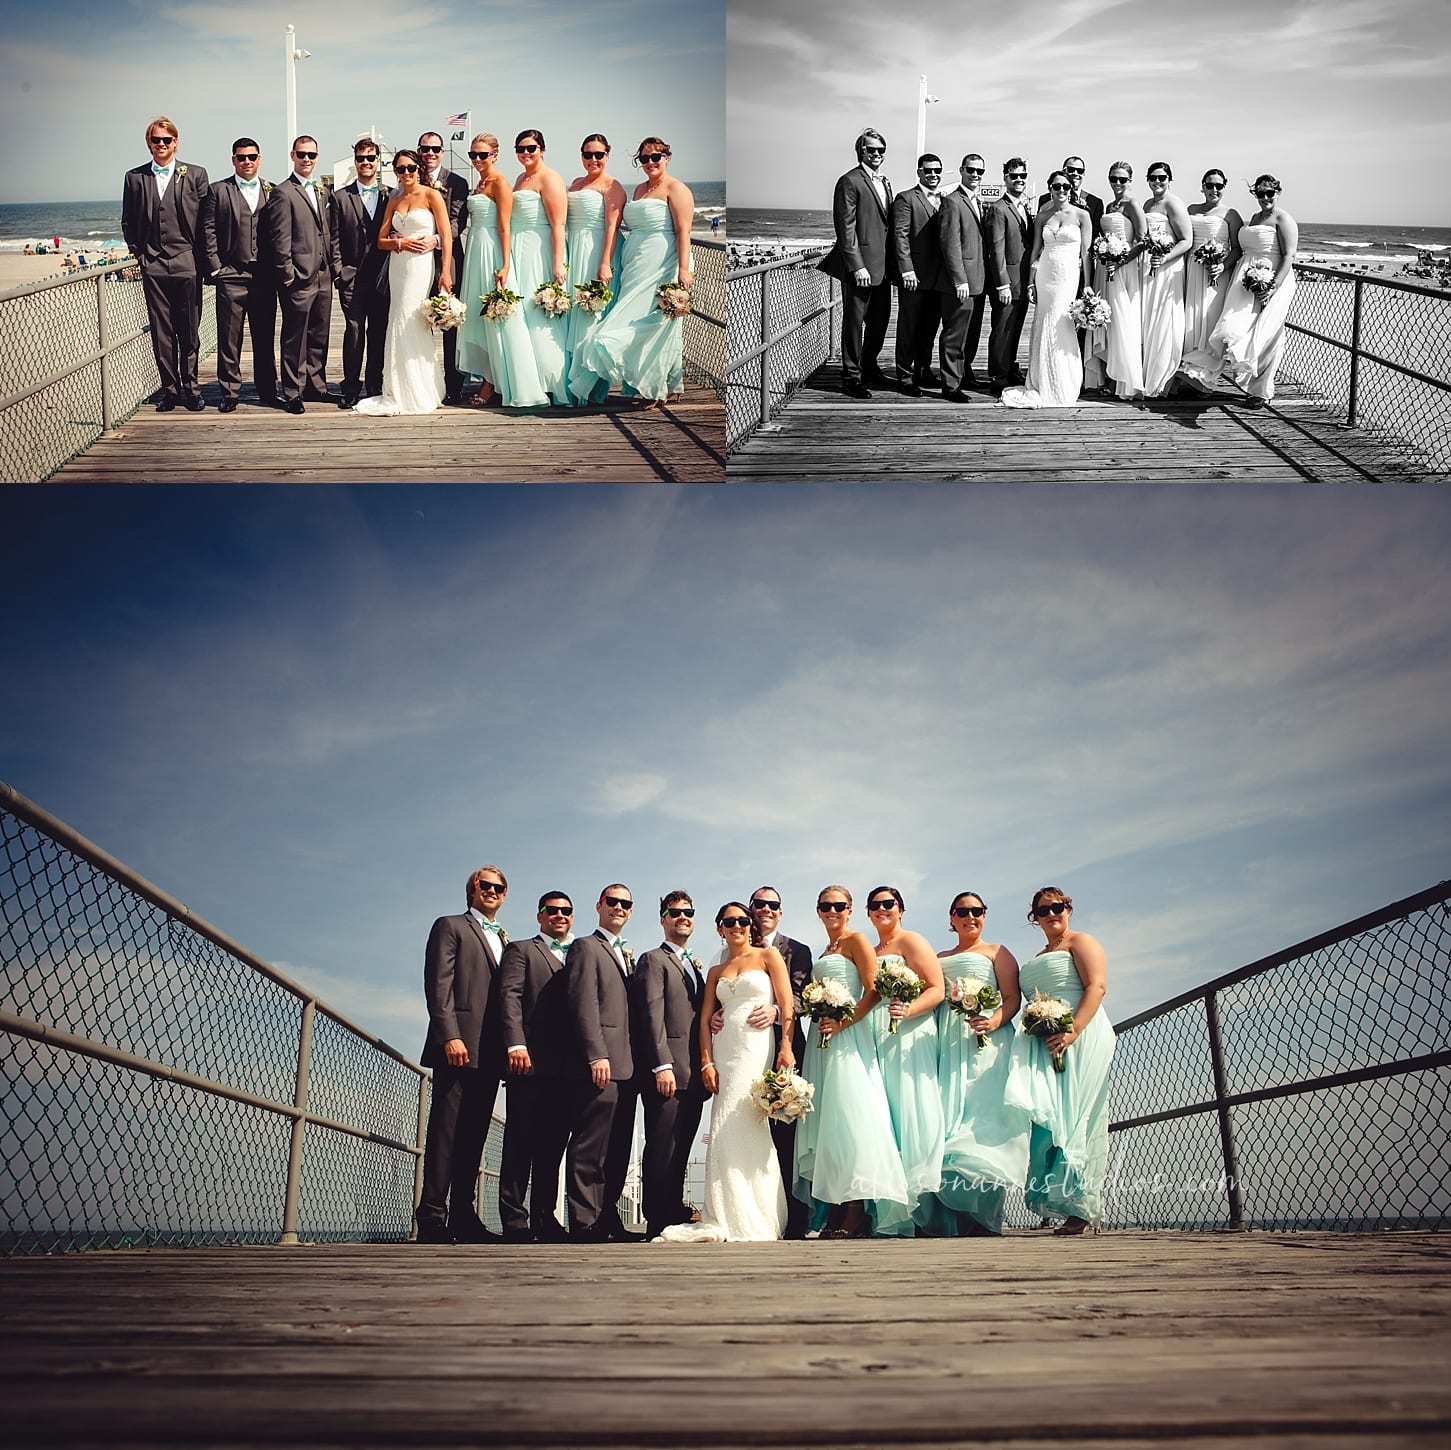 Love, Rachel & Joe, vows, Ocean City, Ocean City Yacht Club, Summer wedding, AllisonAnne Studios, Allison Gallagher, best wedding photographer South Jersey, Hammonton